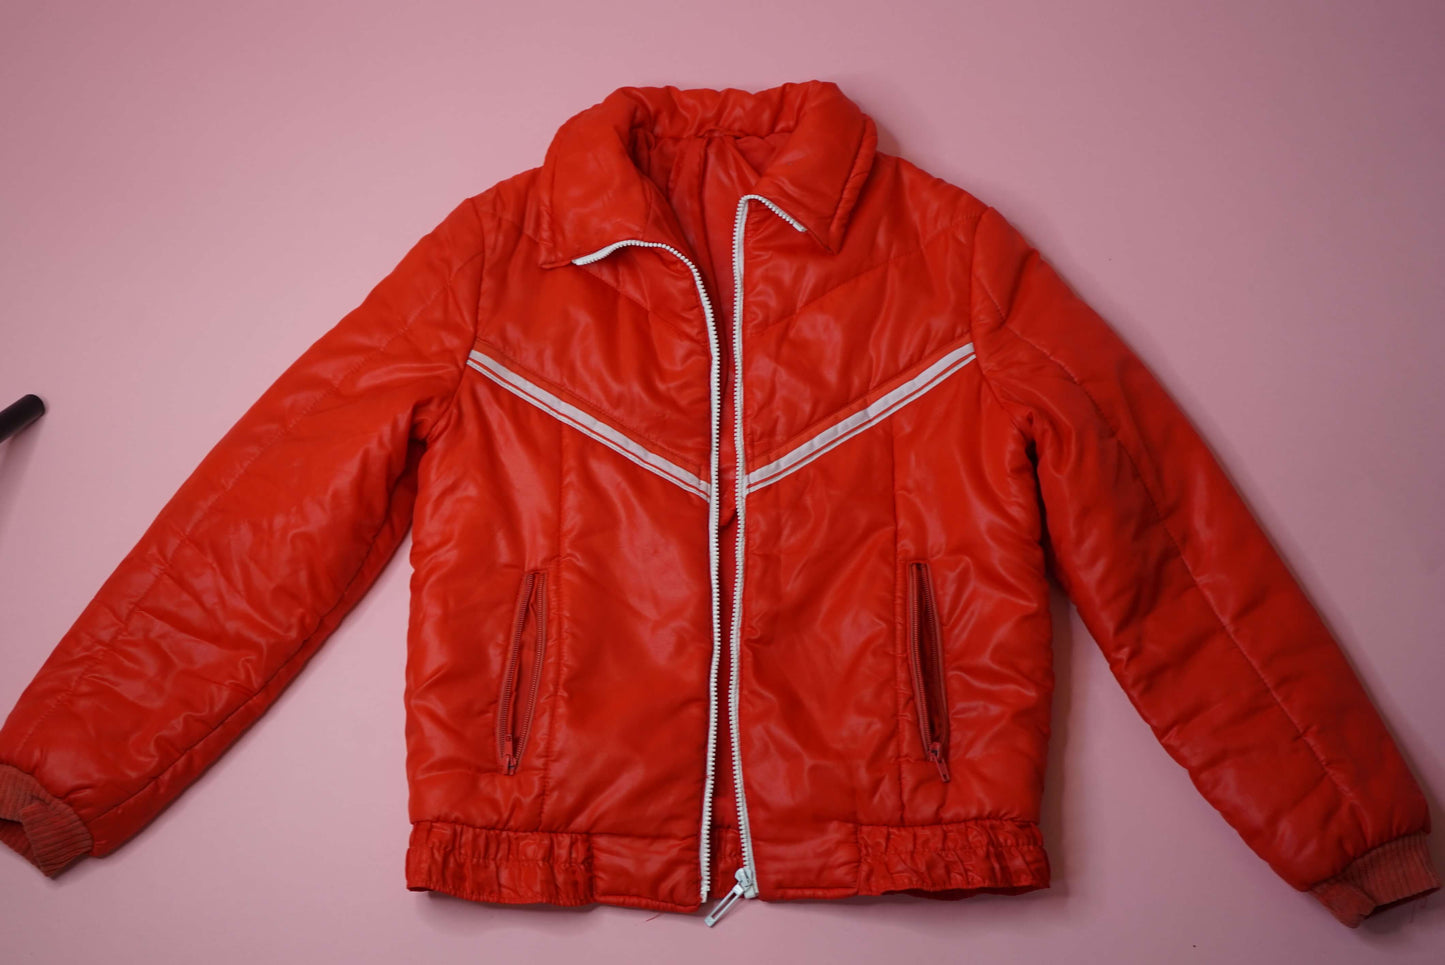 Vintage Retro Red Vintage Puffer Jacket Ski Zip Up Winter Jacket Size S-M 80s 90s Style